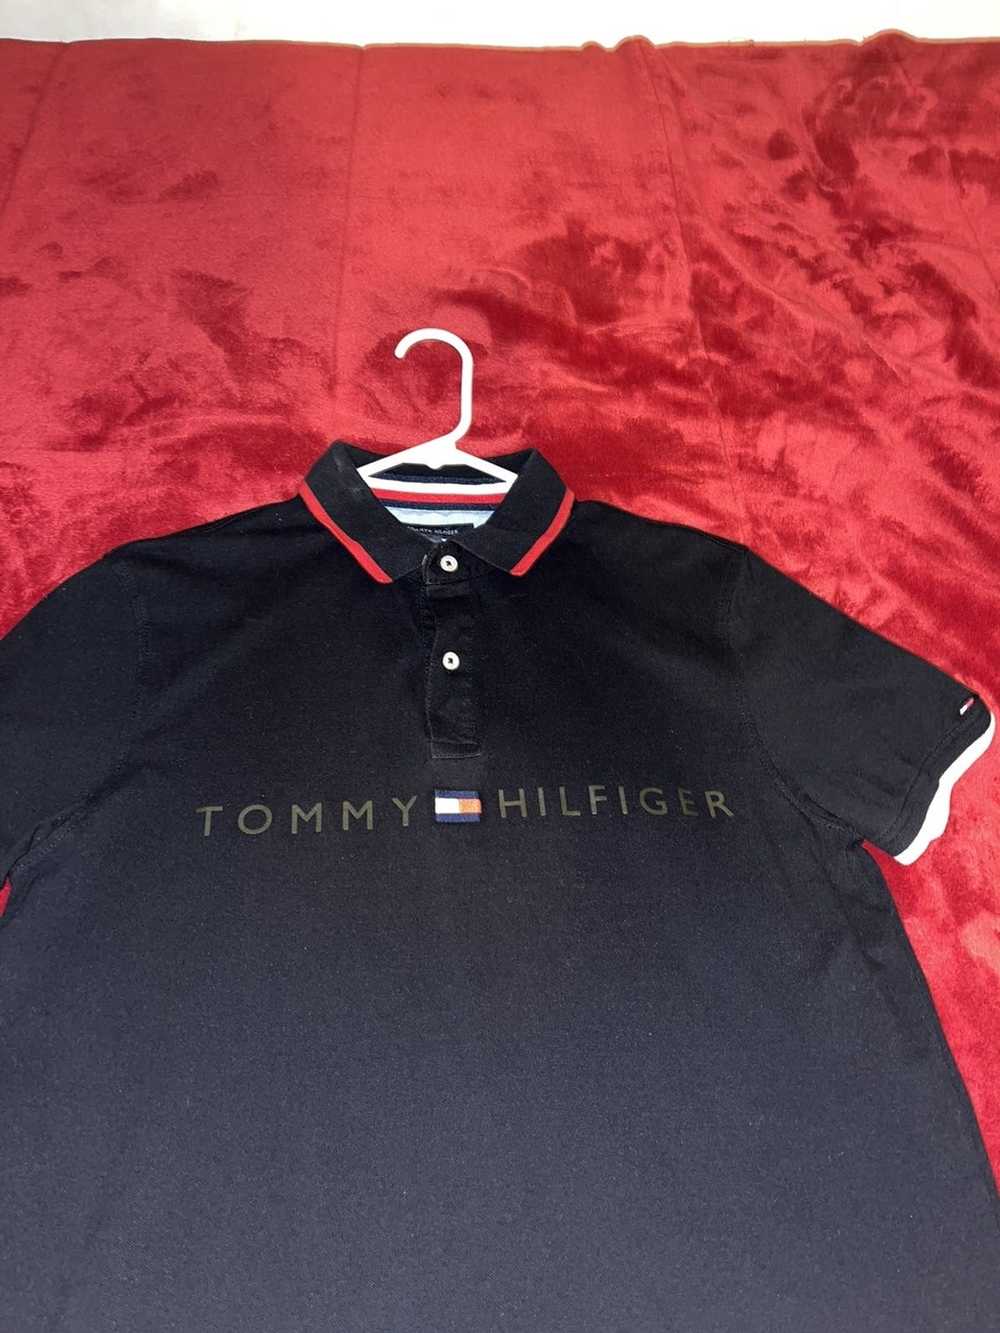 Tommy Hilfiger Tommy Hilfiger polo shirt - image 1